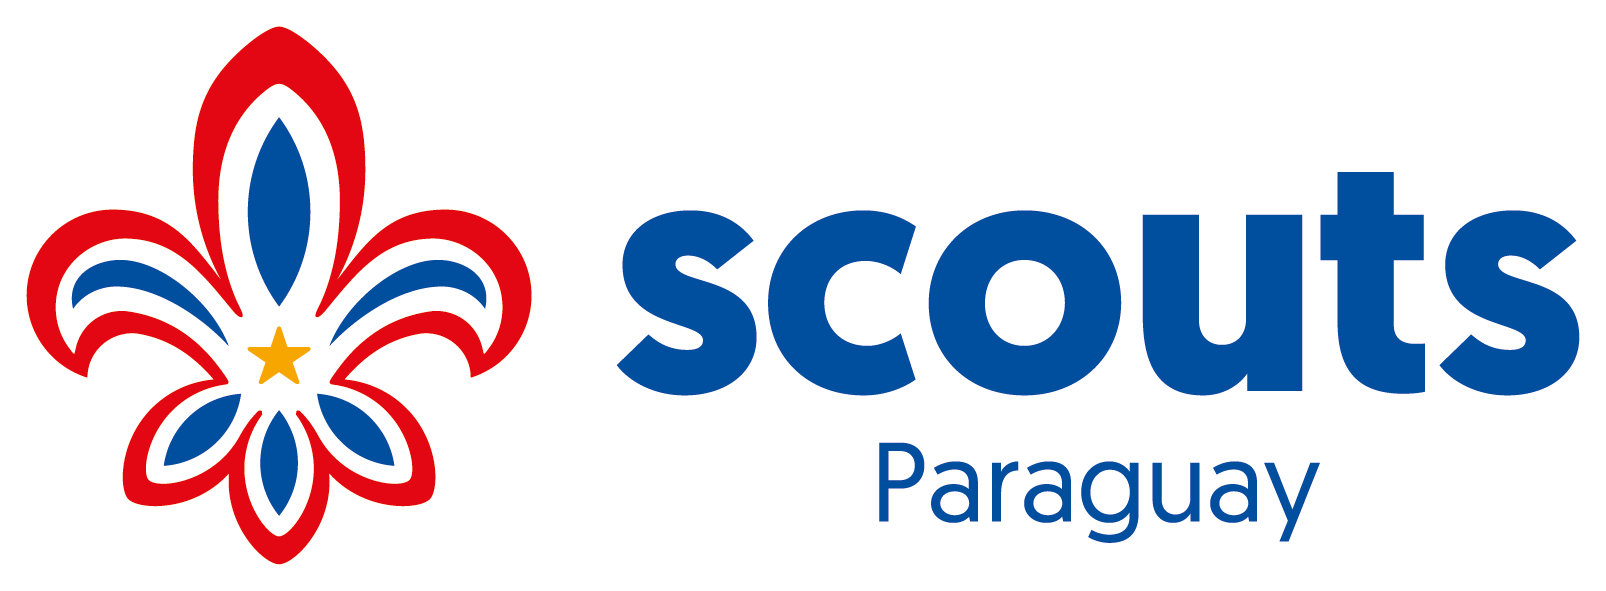 Scouts Paraguay